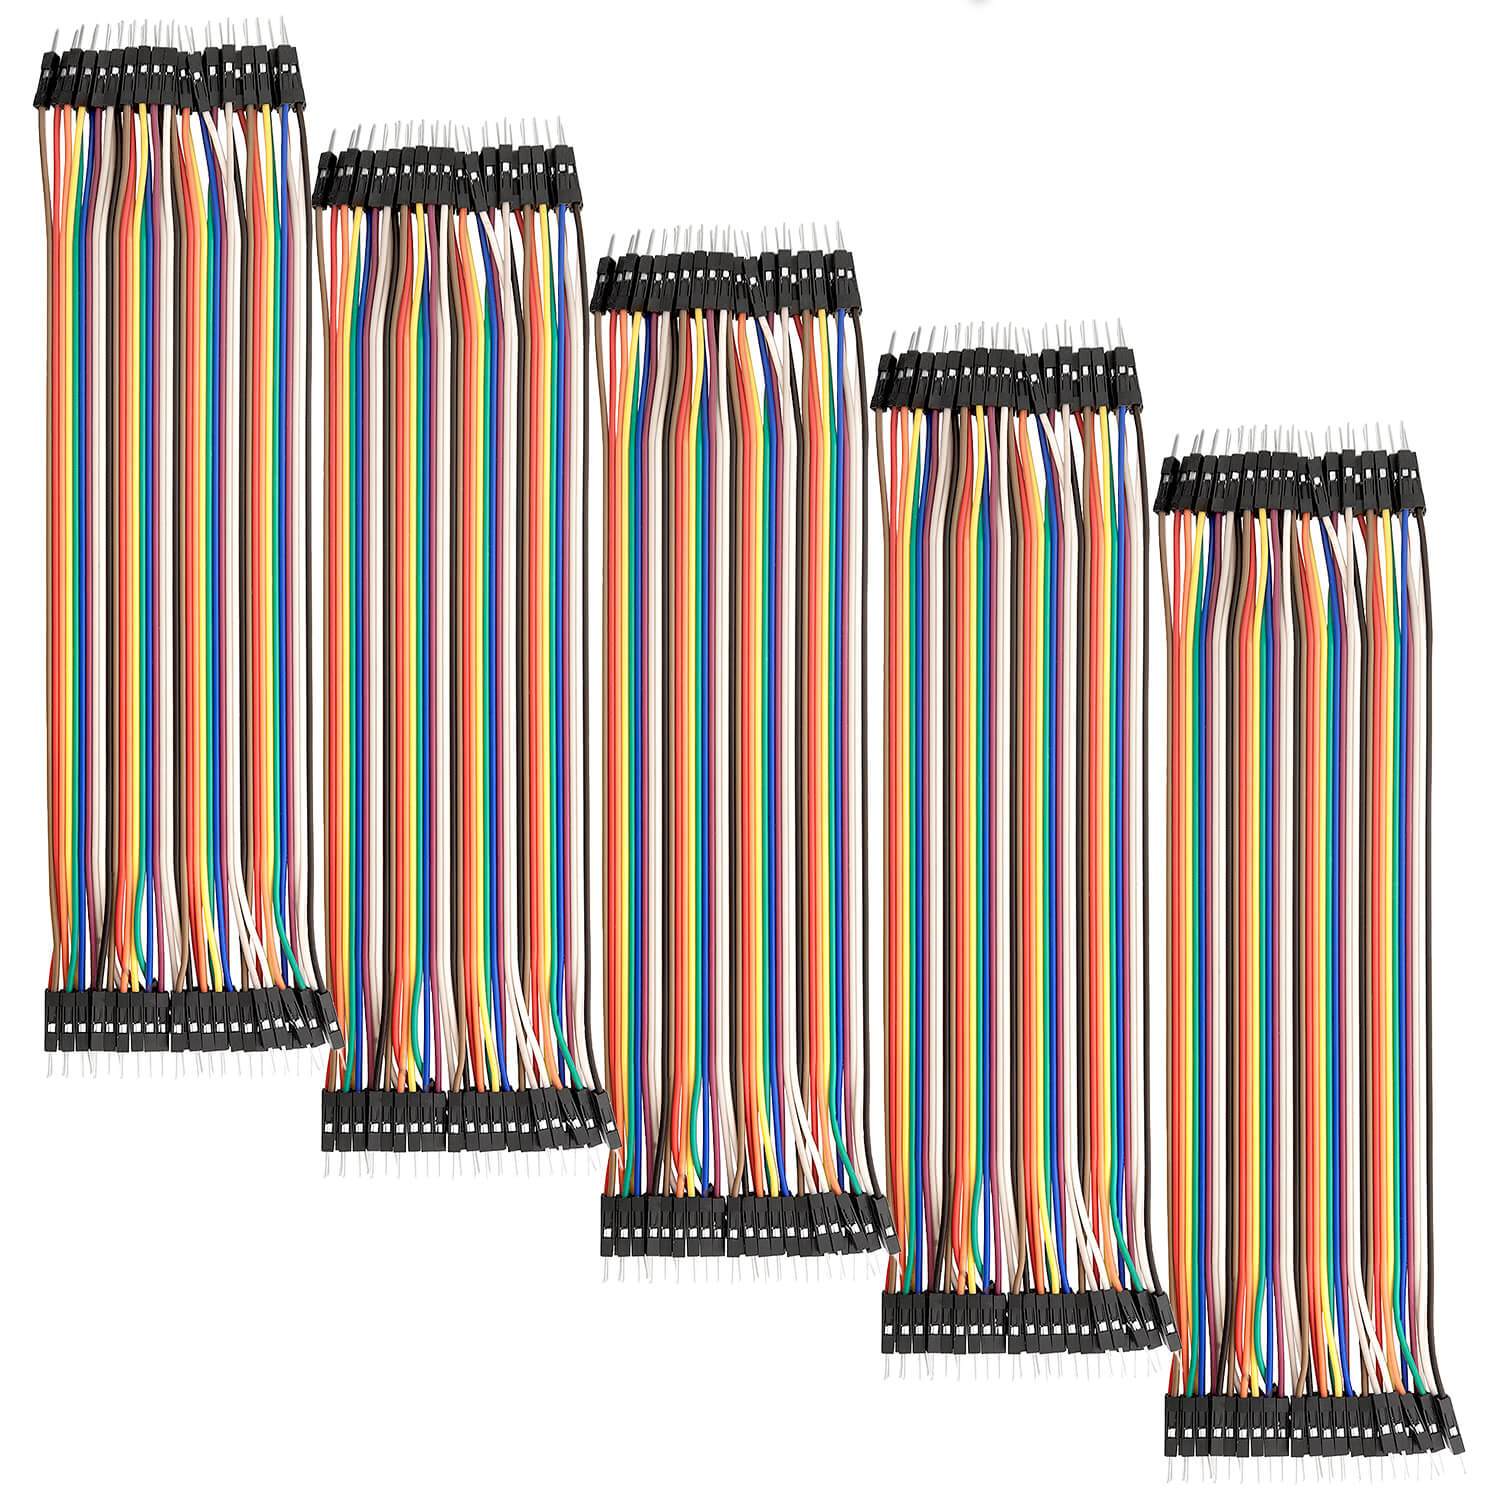 Jumper Wire Kabel 40 STK. je 20 cm M2M Male to Male kompatibel mit Arduino und Raspberry Pi Breadboard - AZ-Delivery